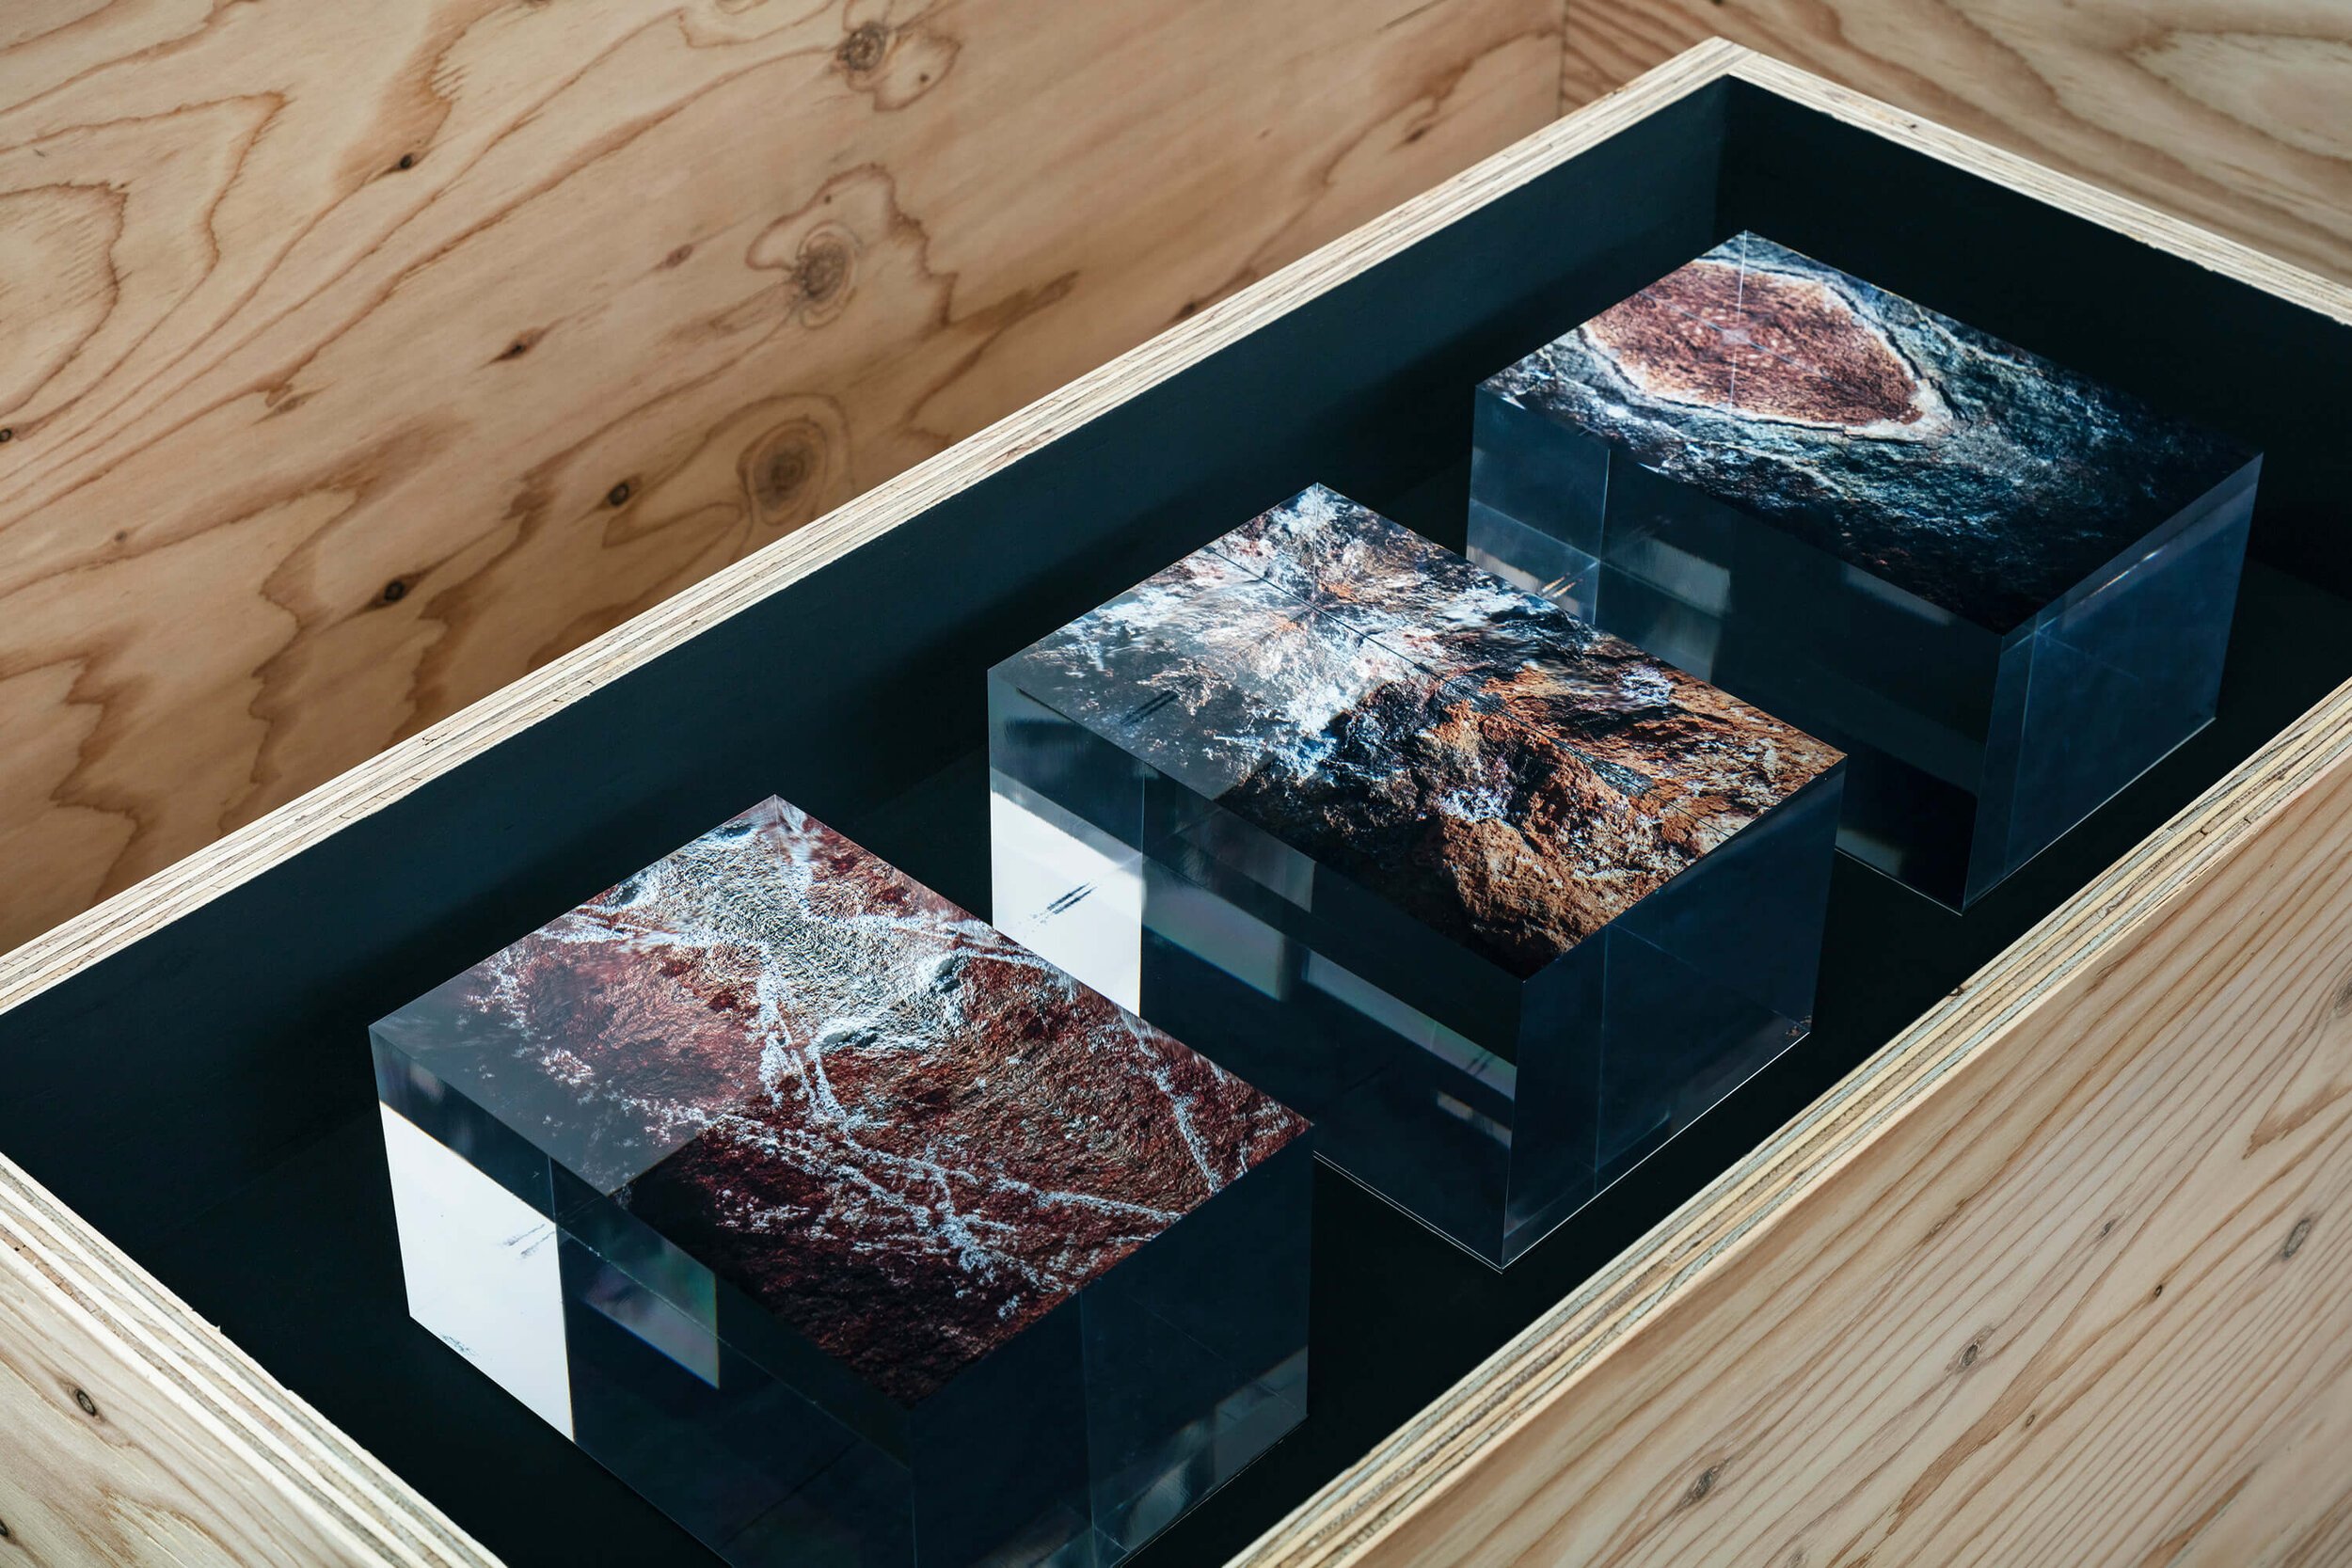  Teruhiro Yanagihara Studioの柳原照弘がデザインしたEARTHSCAPEの写真を展示したボックス 